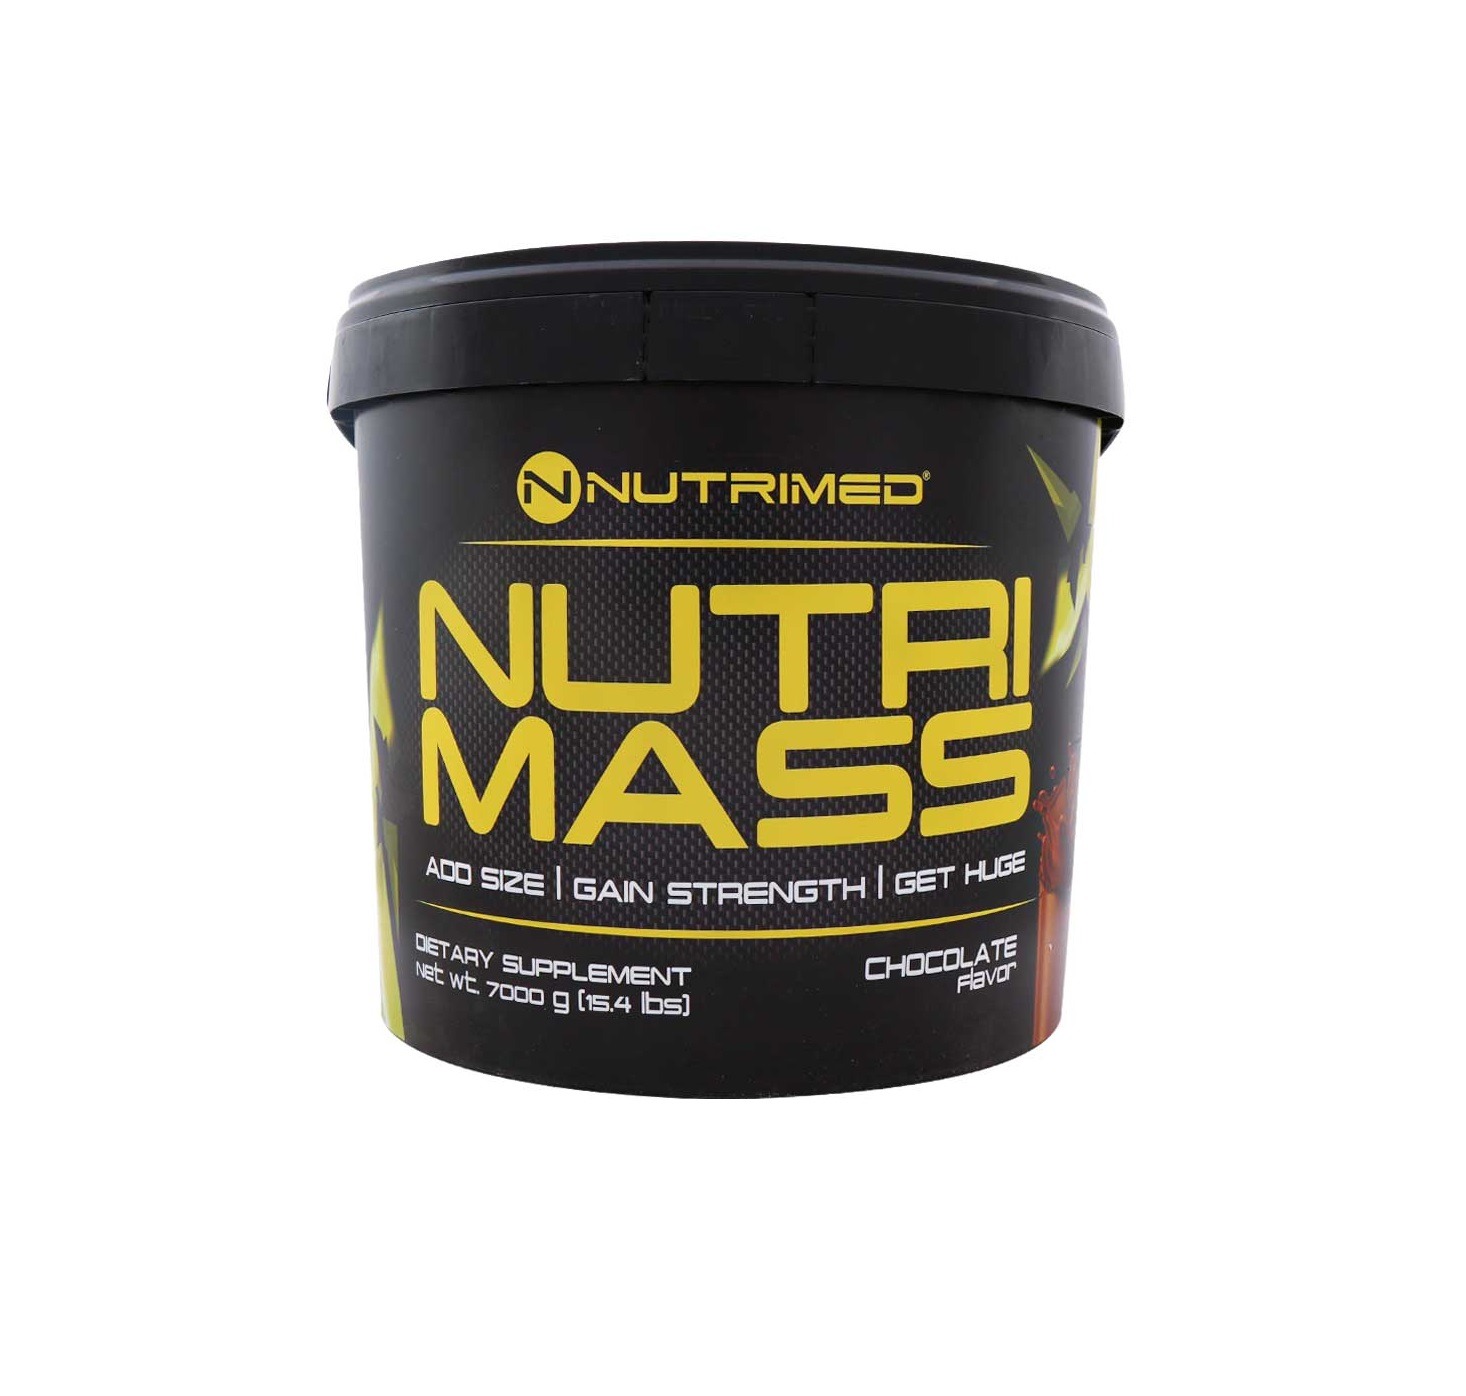 نوتری مس نوتریمد 7 کیلوگرم | Nutrimed Nutri Mass Powder 7 Kg